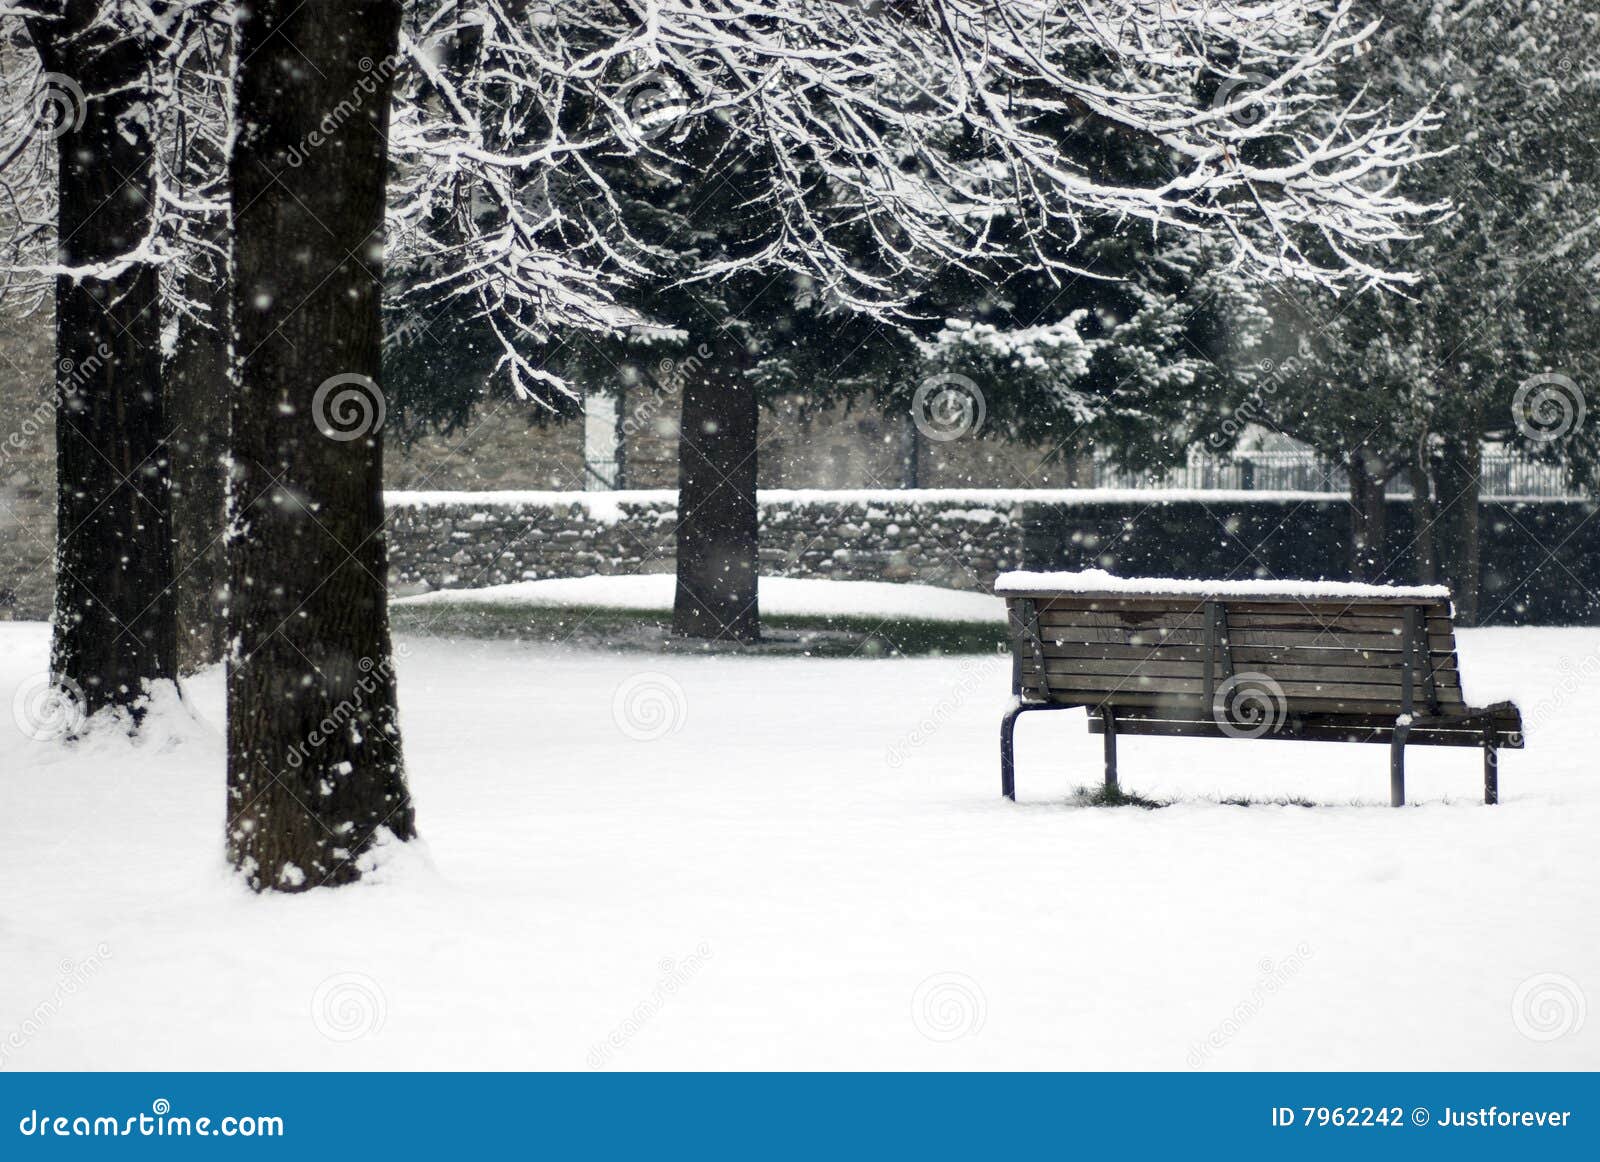 winter scene - snowfall in the park